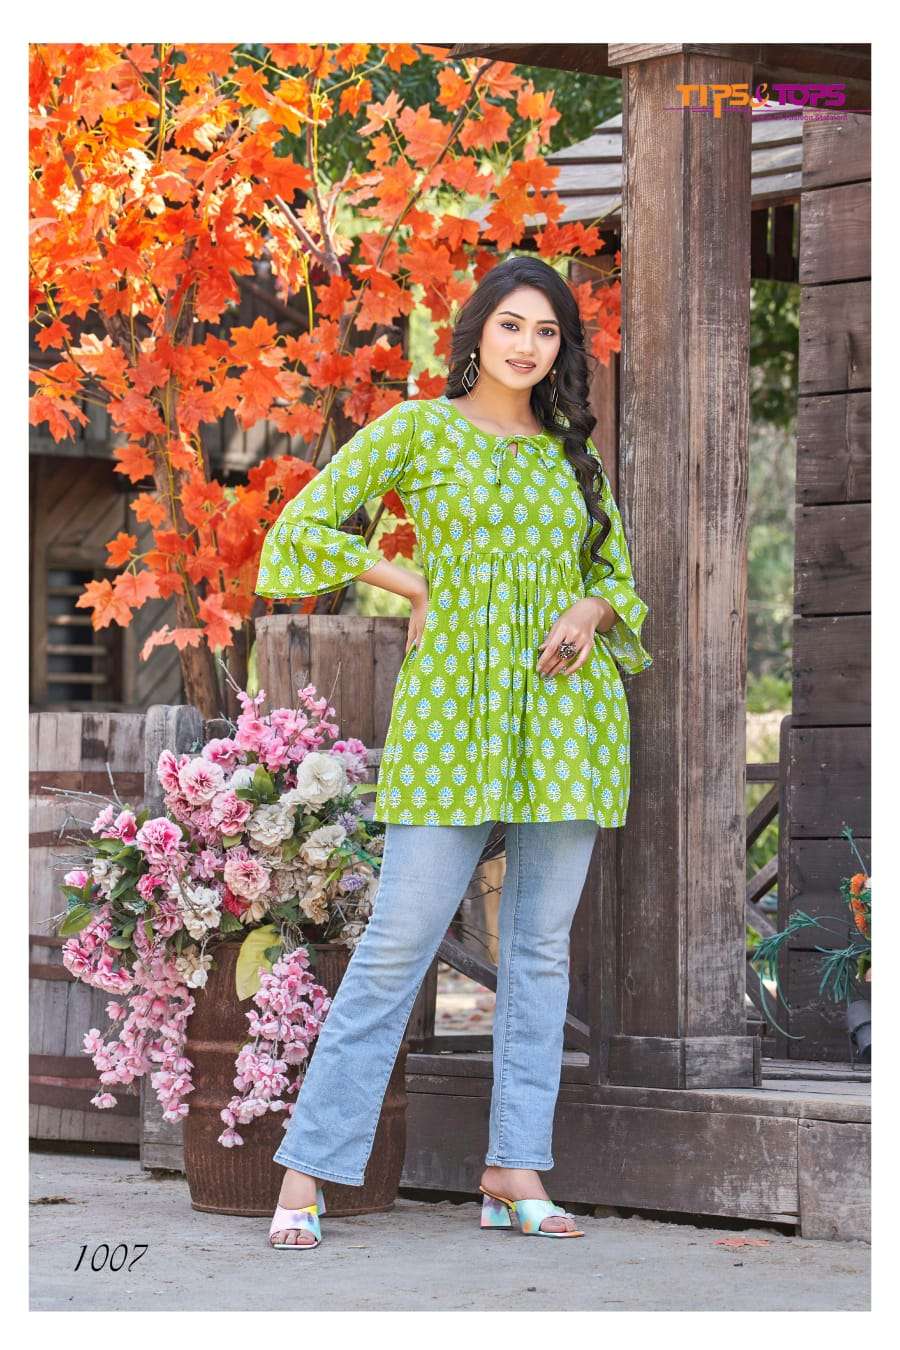 tips & tops cotton shorties vol 3 fancy shorts kurti catalogue manufacturer surat 